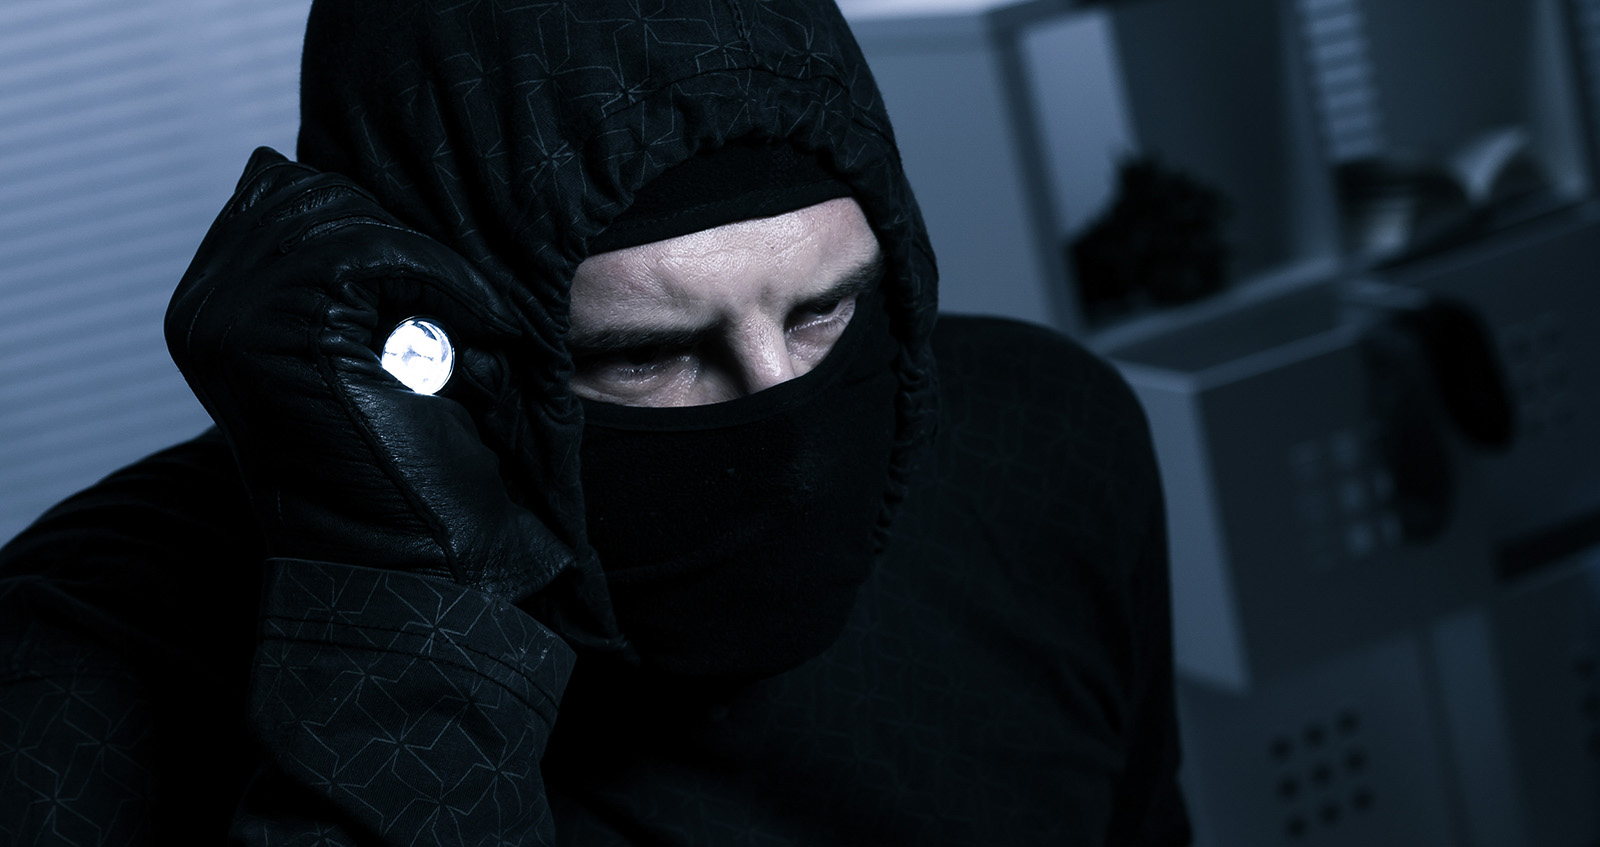 Masked burglar with flashlight during a burglary at night